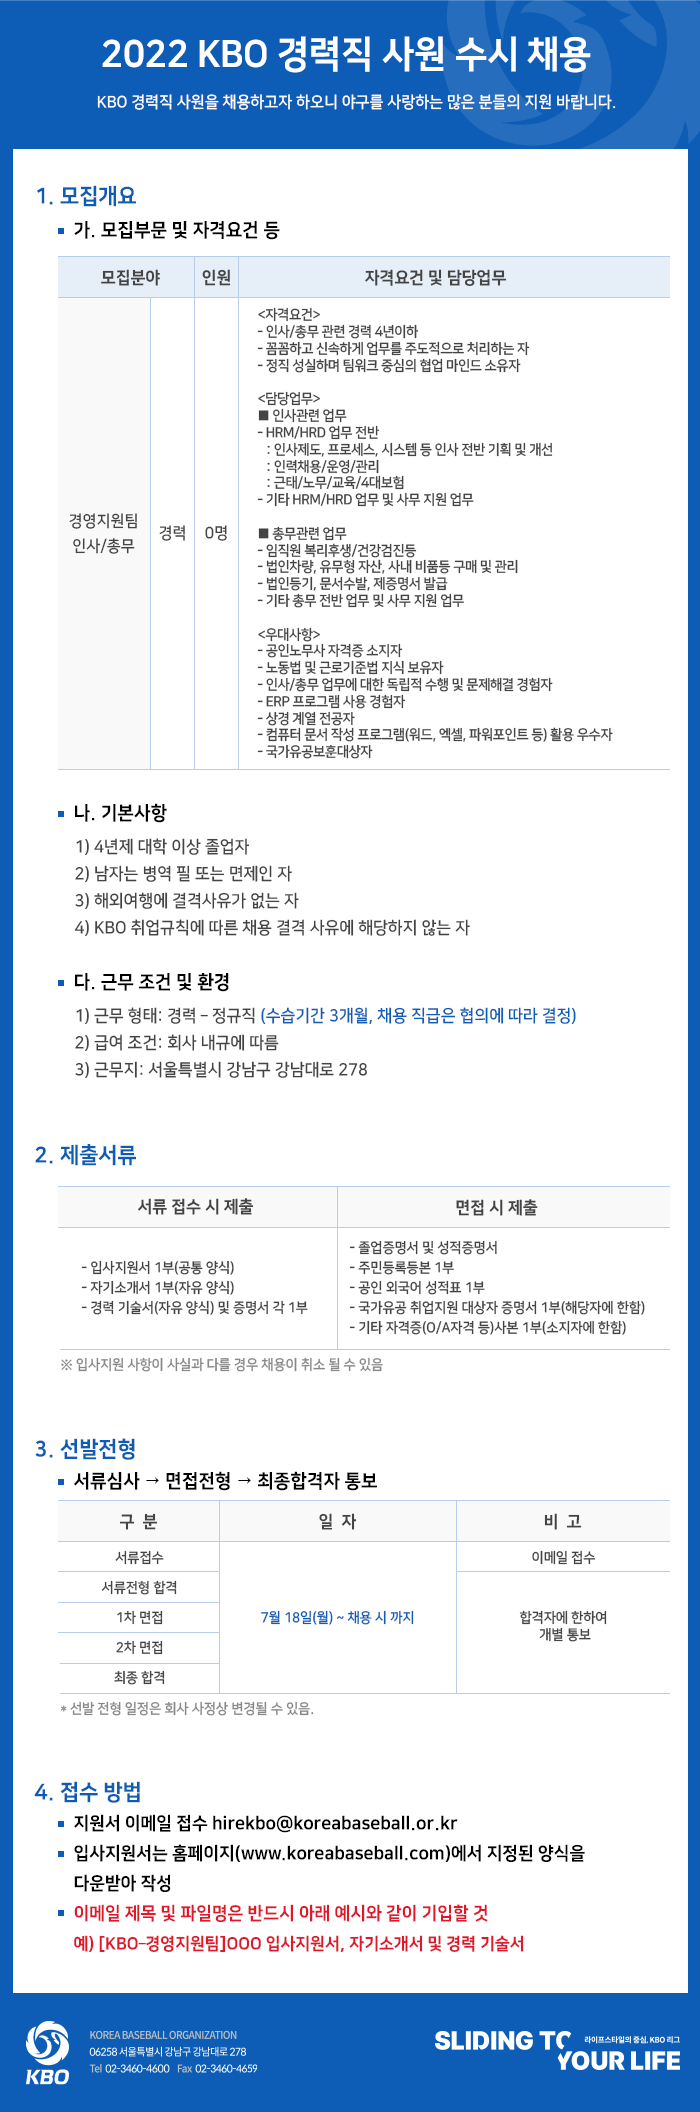 notice/images/2022/7/2022 KBO 경력직 사원 7월 수시 채용_web내용.png